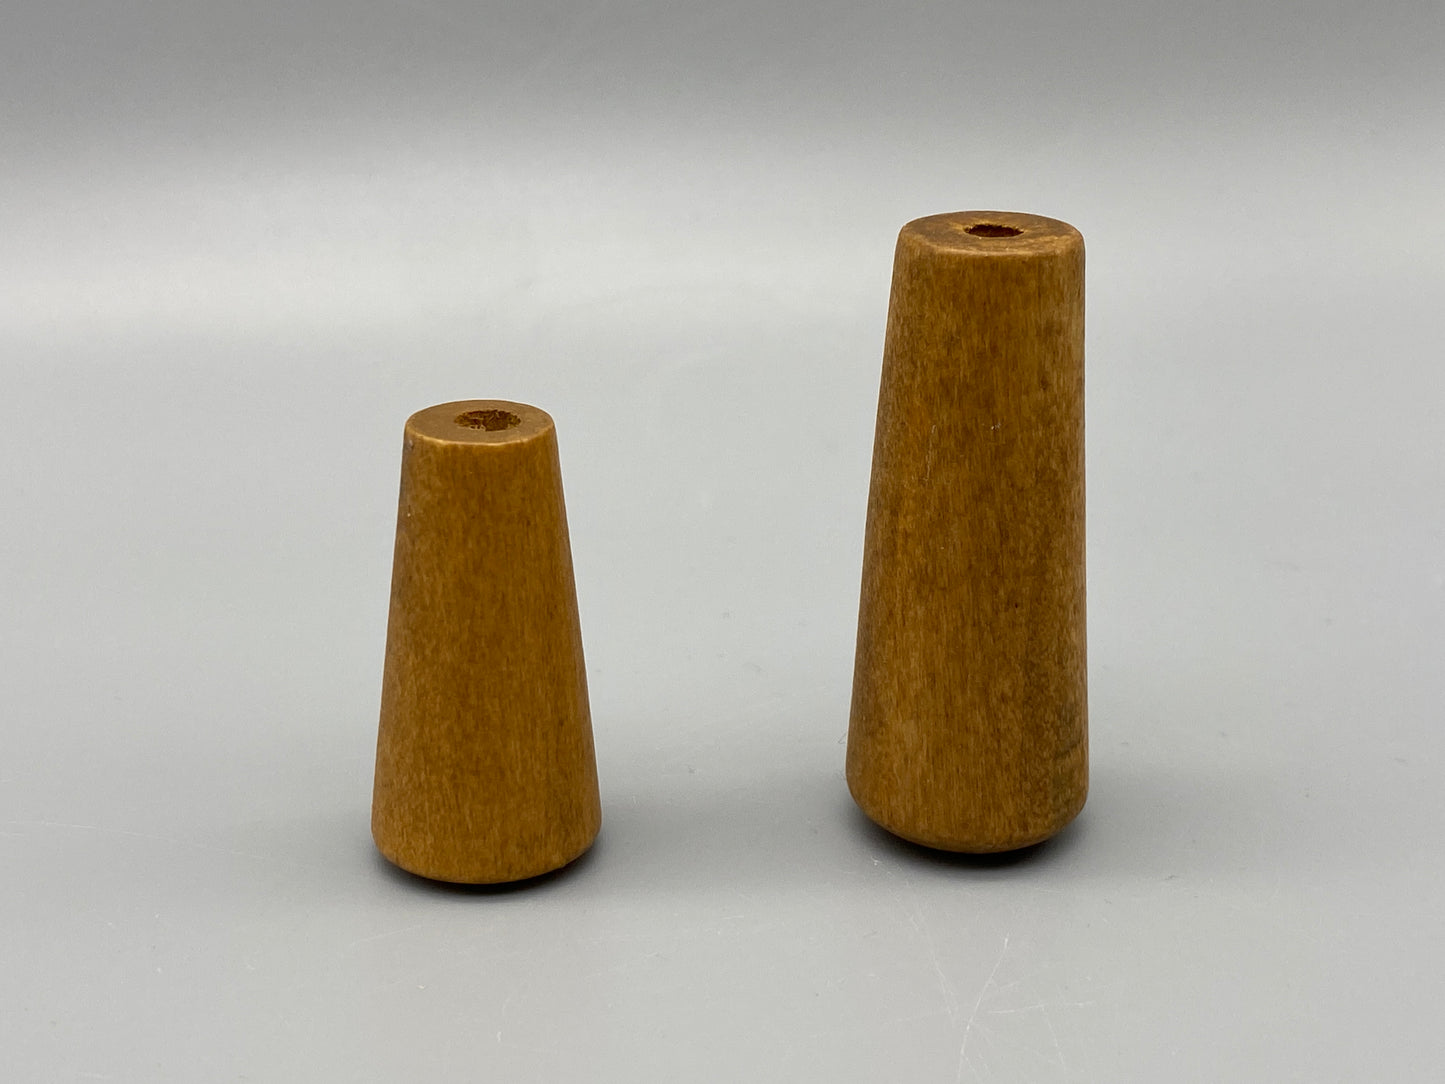 3x Slim Natural Wooden Blinds Acorns - Cord Pull / Light Pulls - Medium & Large Sizes - Pack of 3